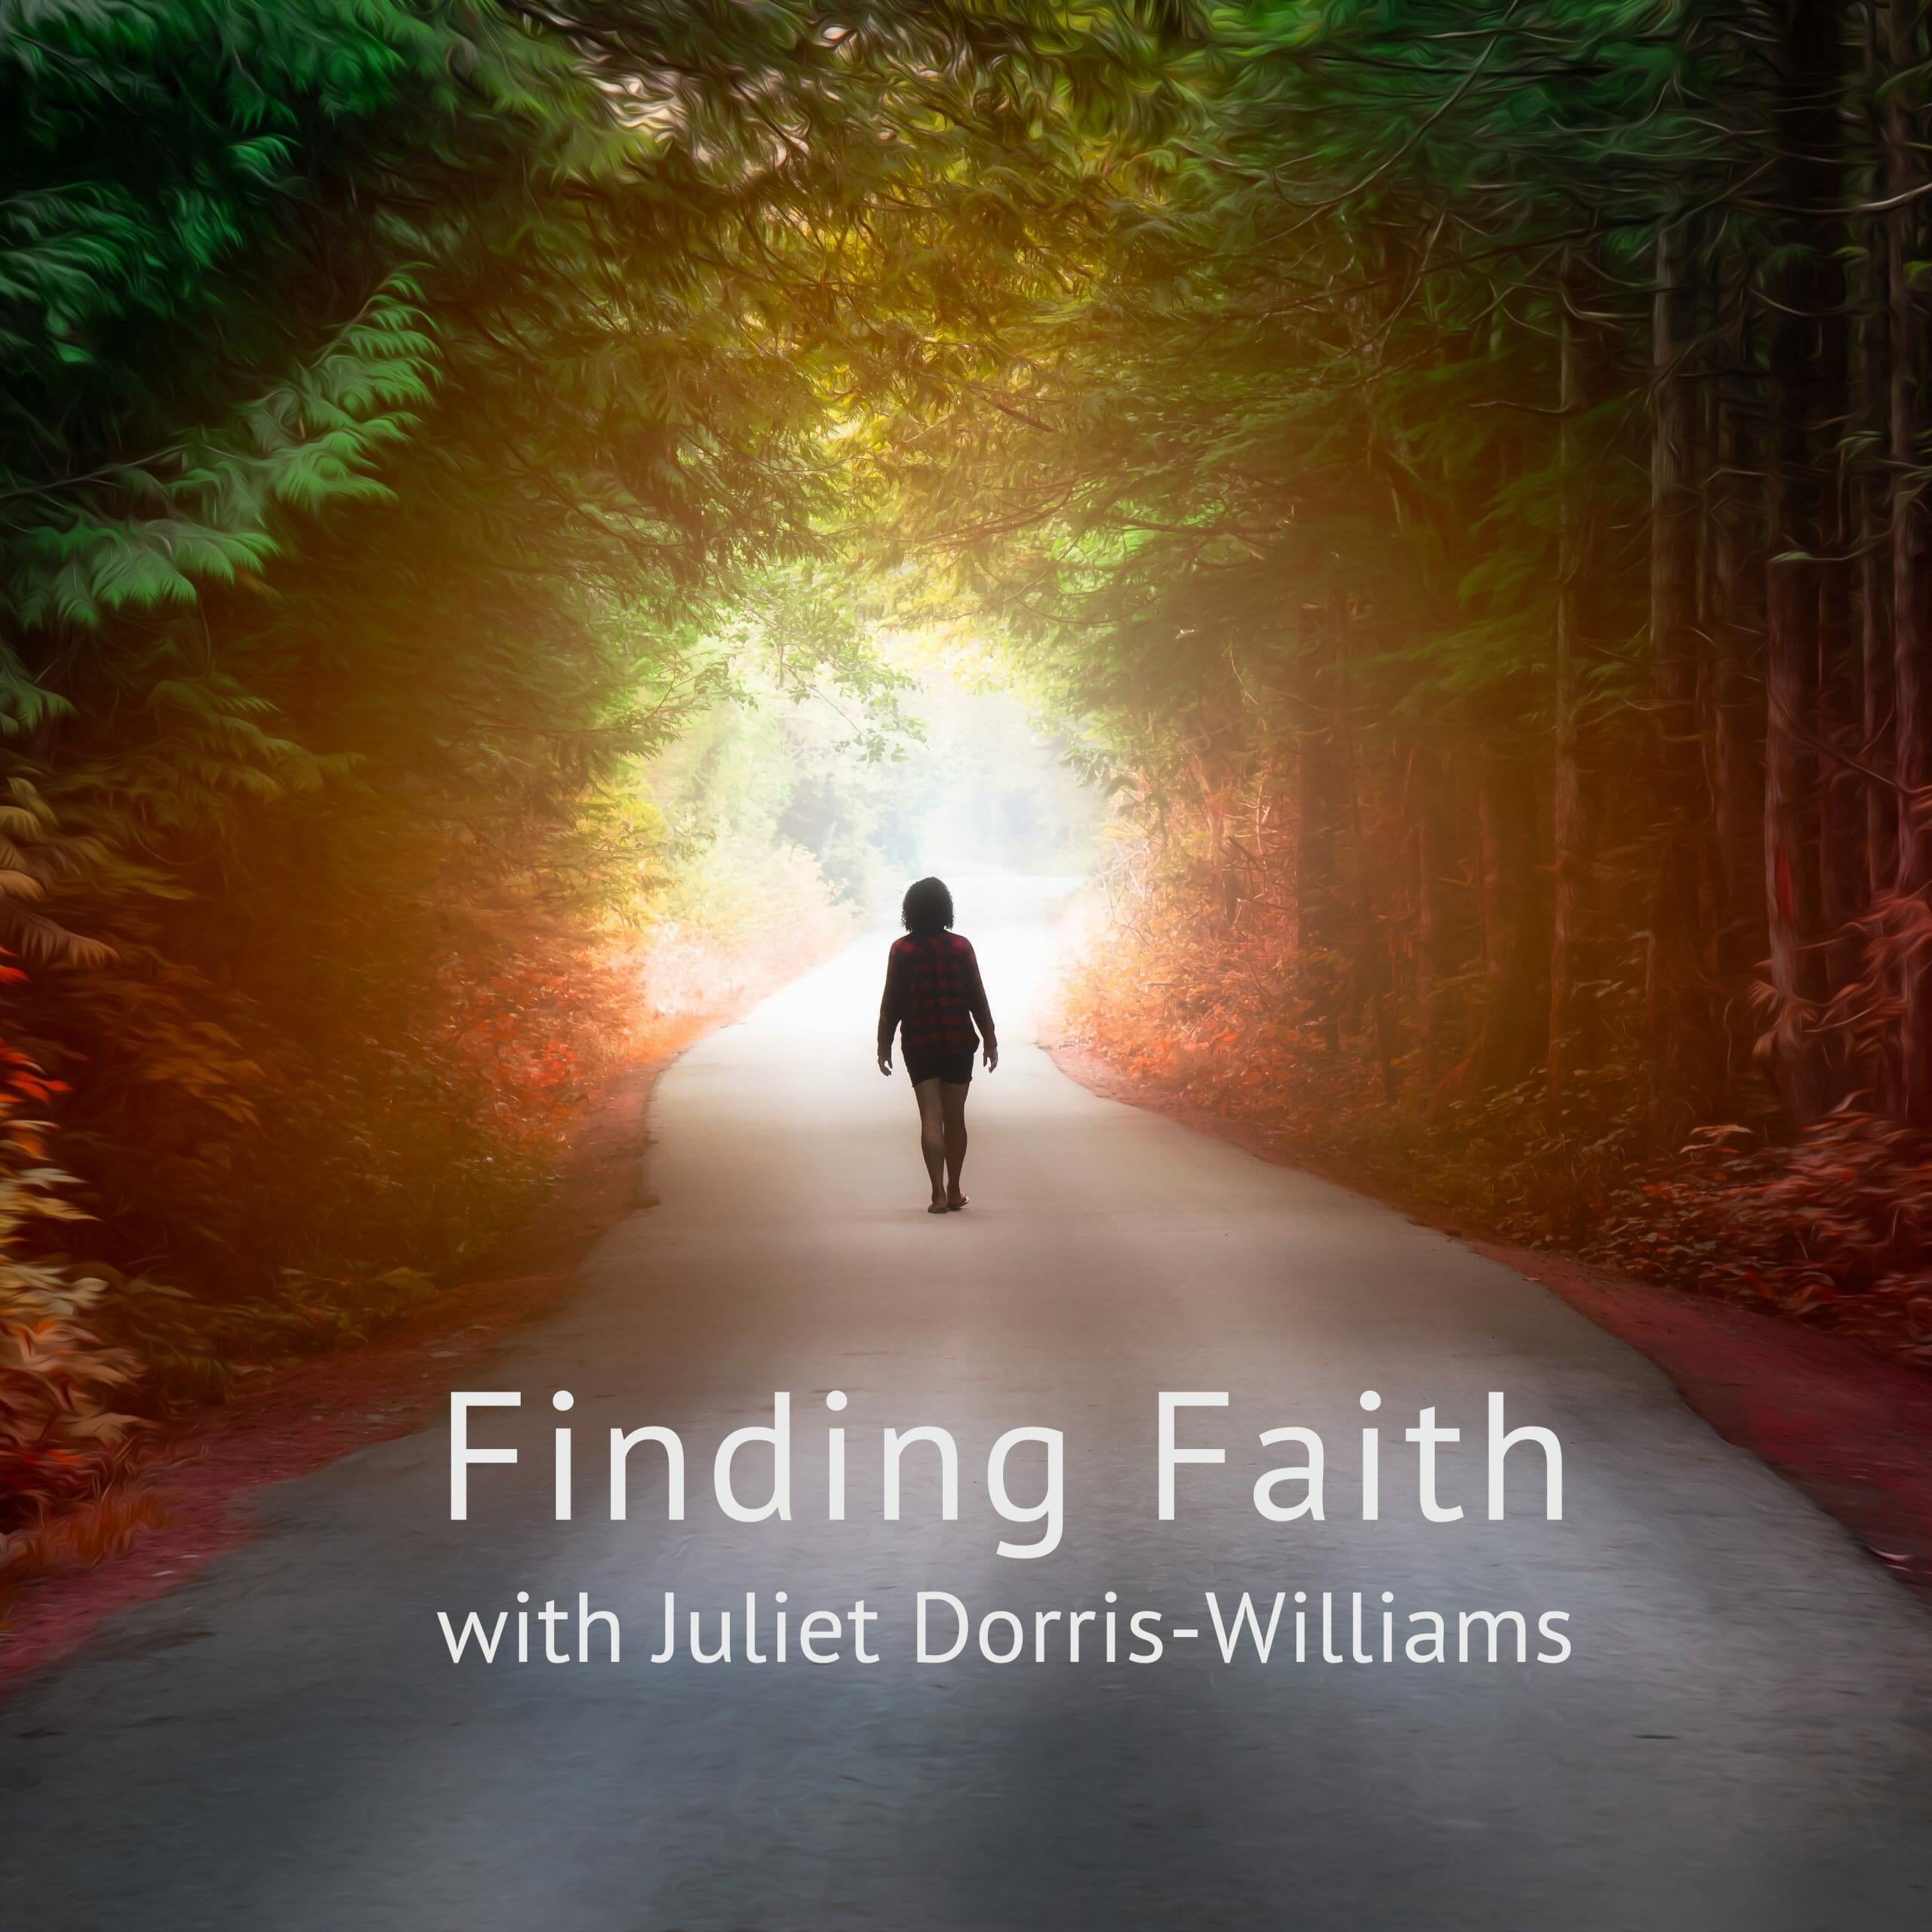 Finding Faith with Juliet Dorris-Williams